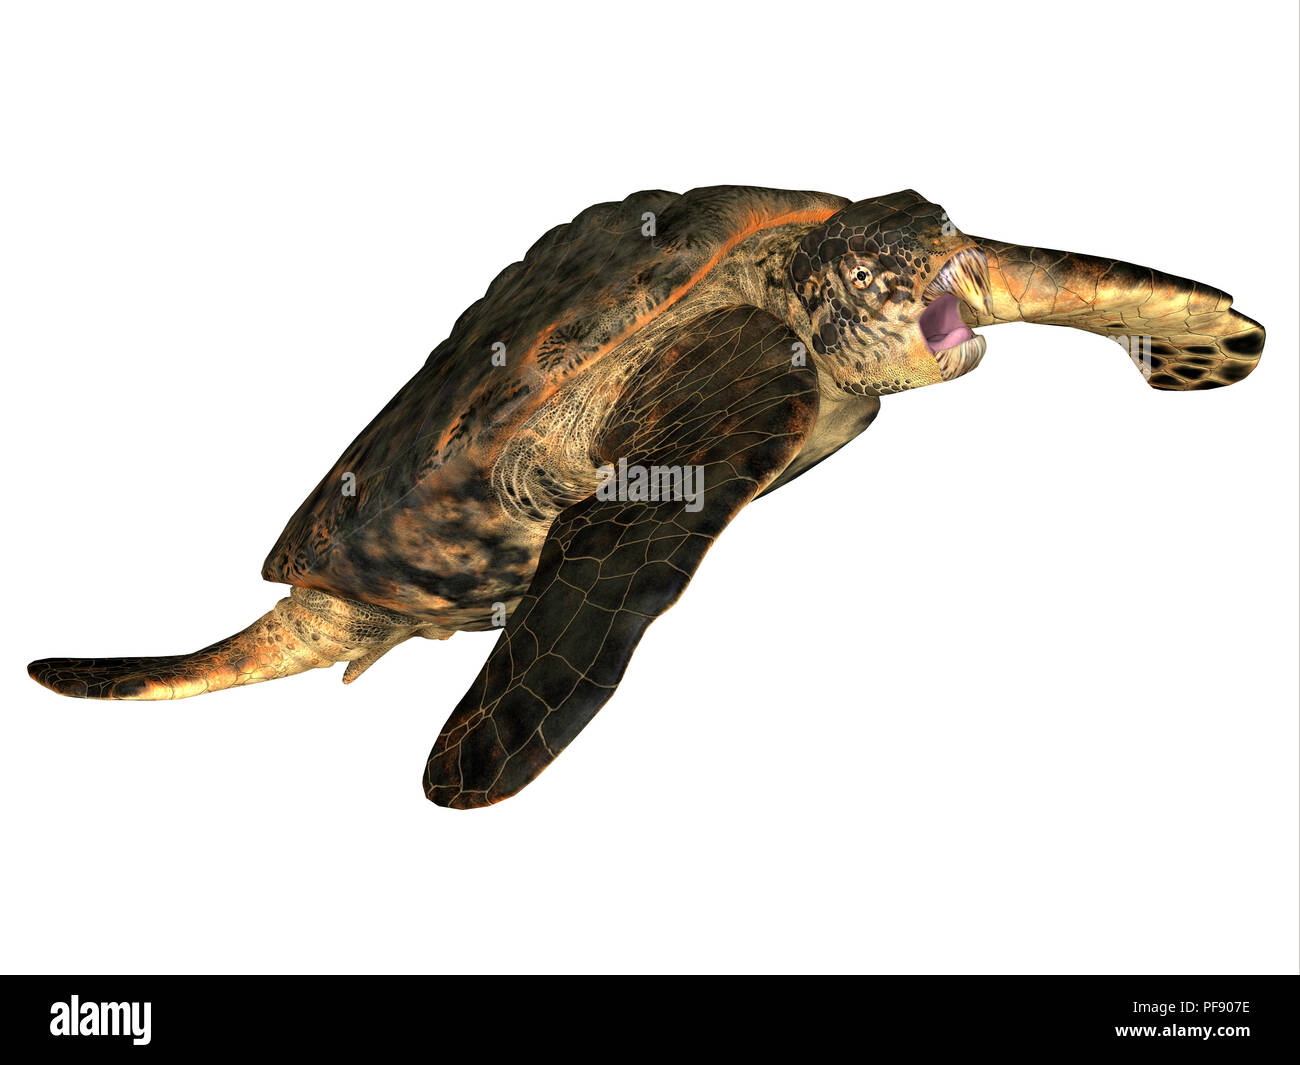 Archelon Turtle - Archelon was an aquatic reptile sea turtle that lived in South Dakota, USA during the Cretaceous Period. Stock Photo